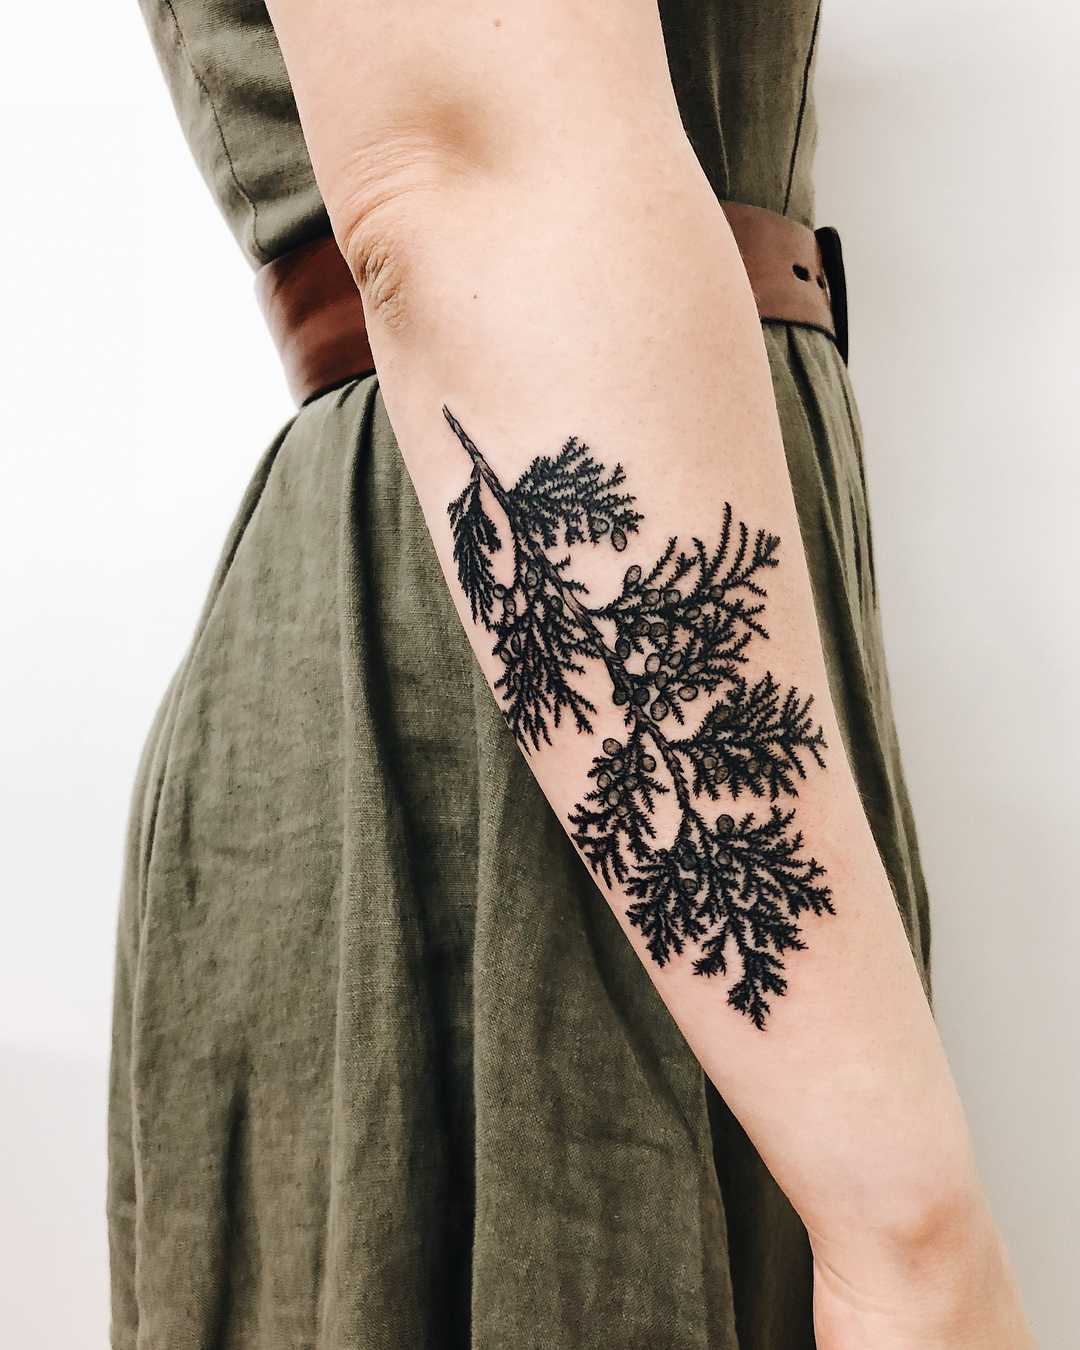 A black branch tattoo by Finley Jordan